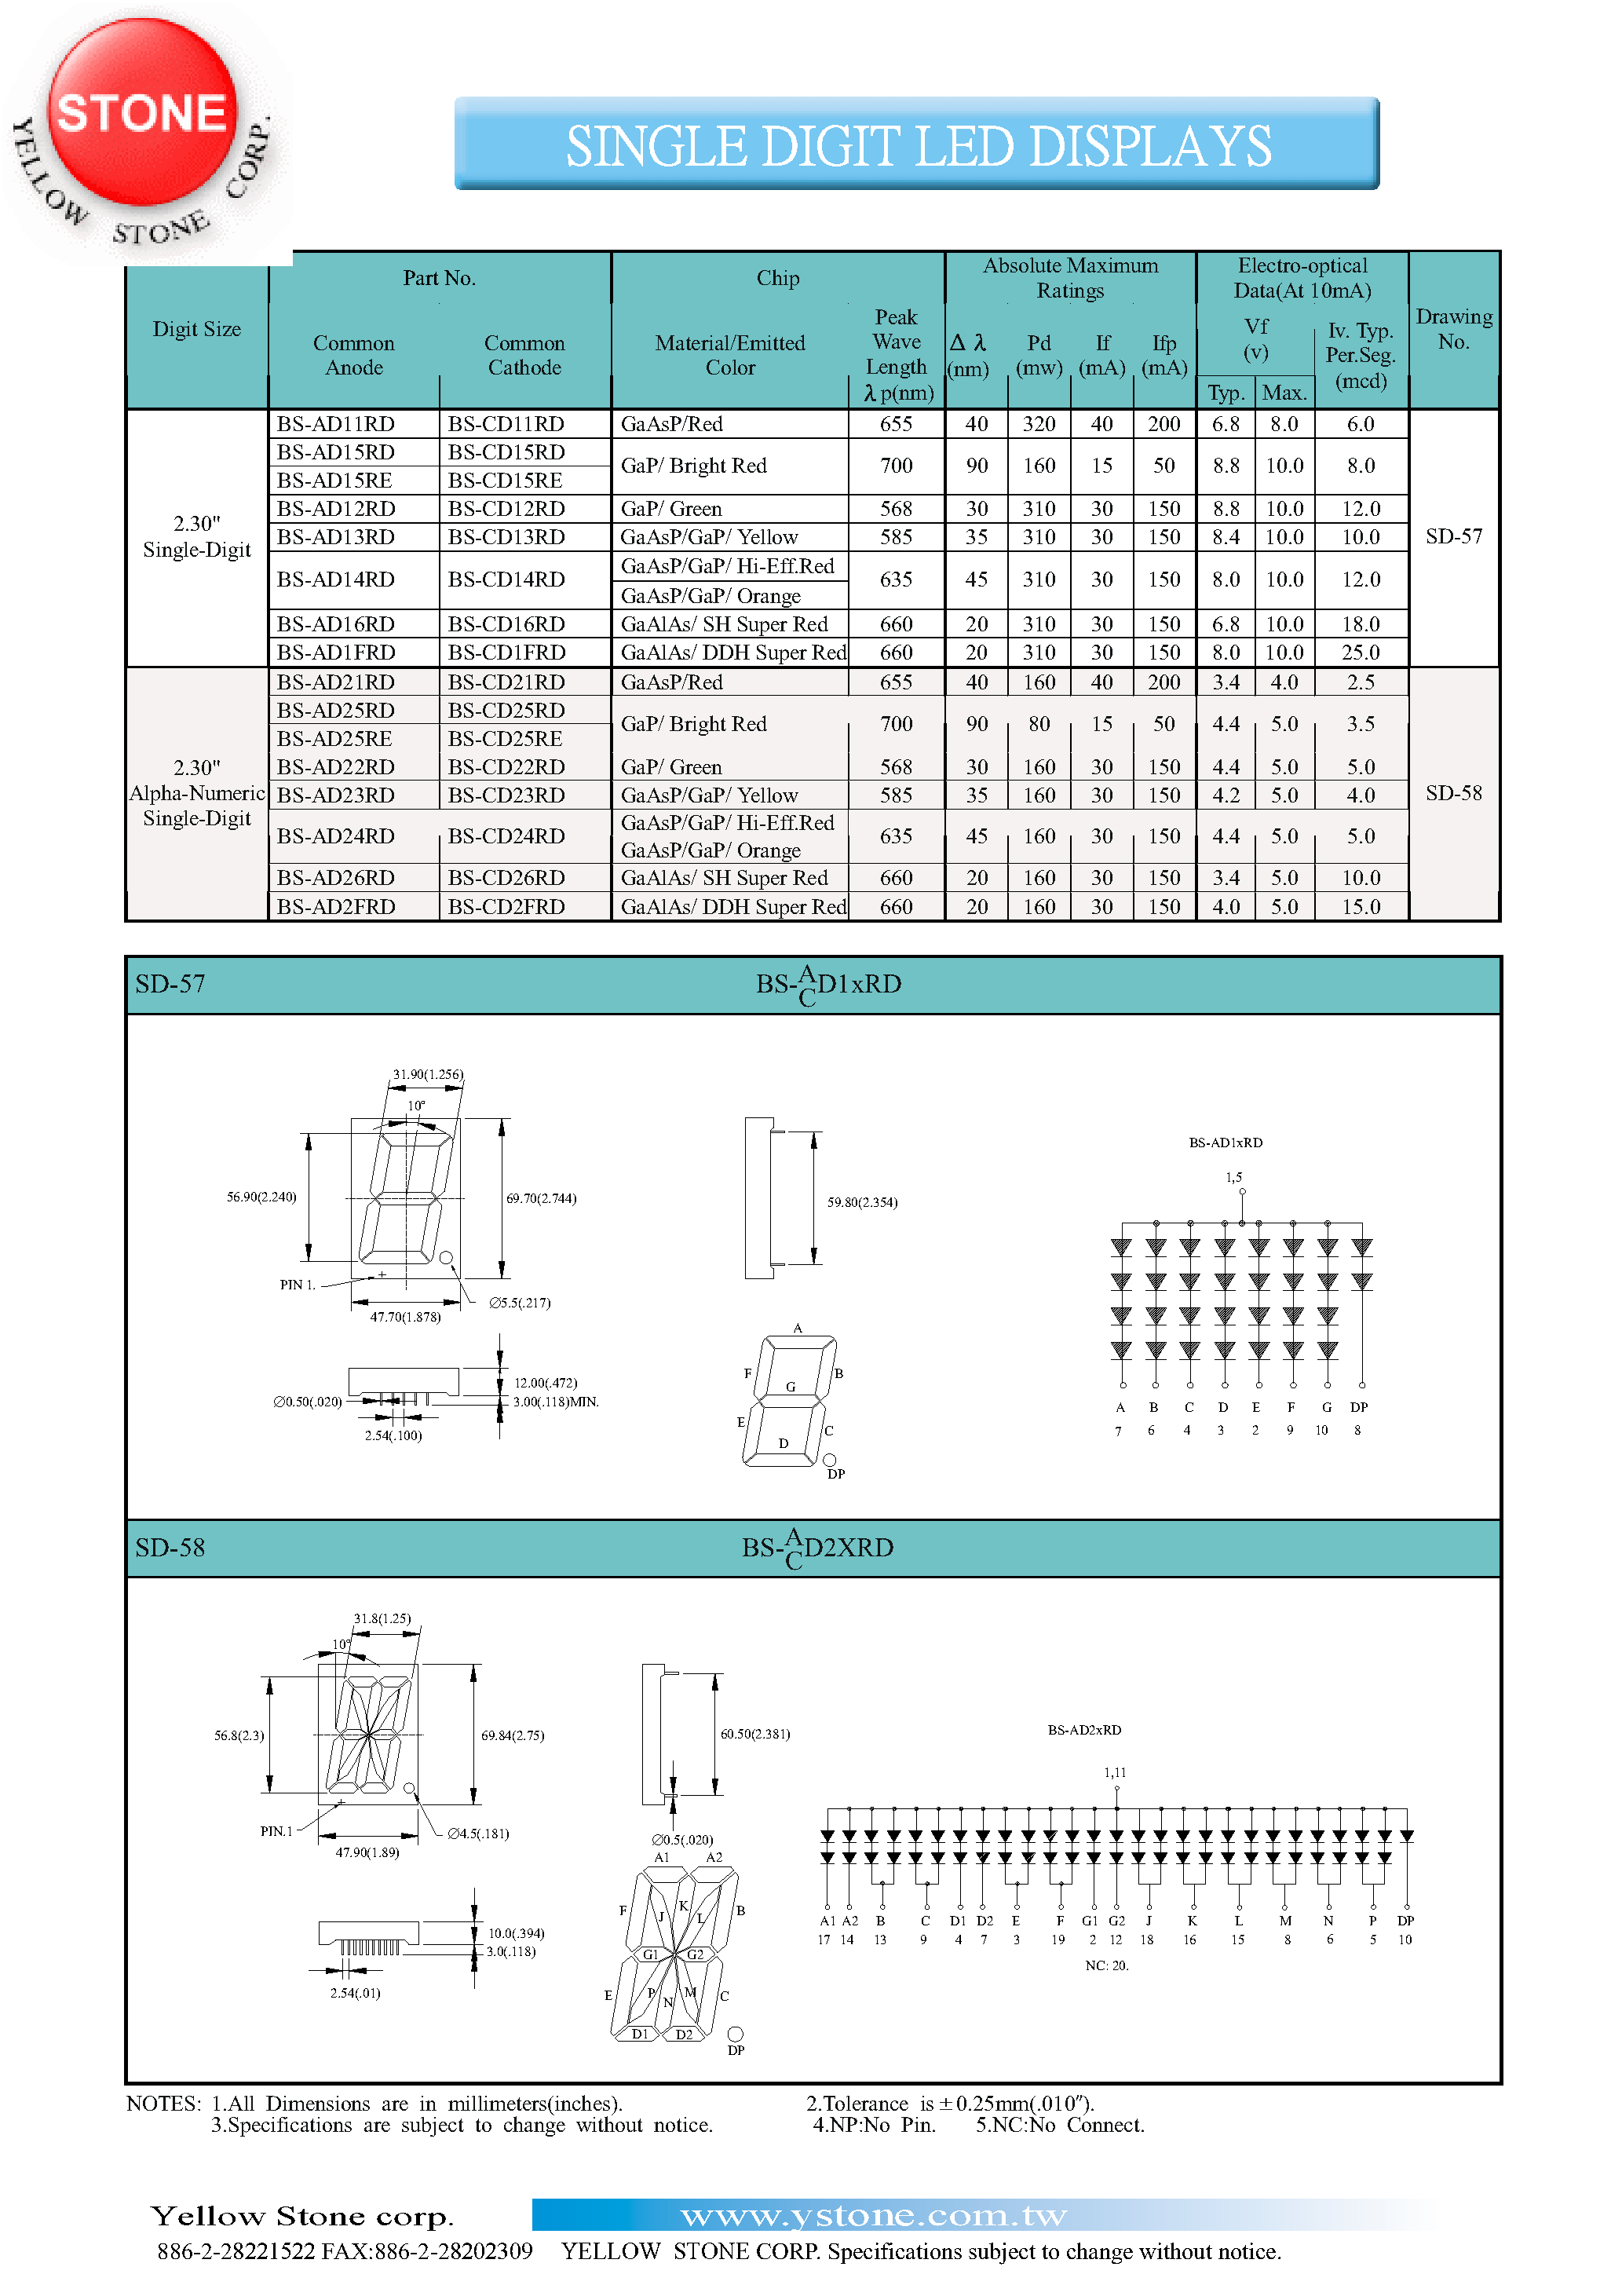 Datasheet BS-AD25RD - SINGLE DIGIT LED DISPLAYS page 1